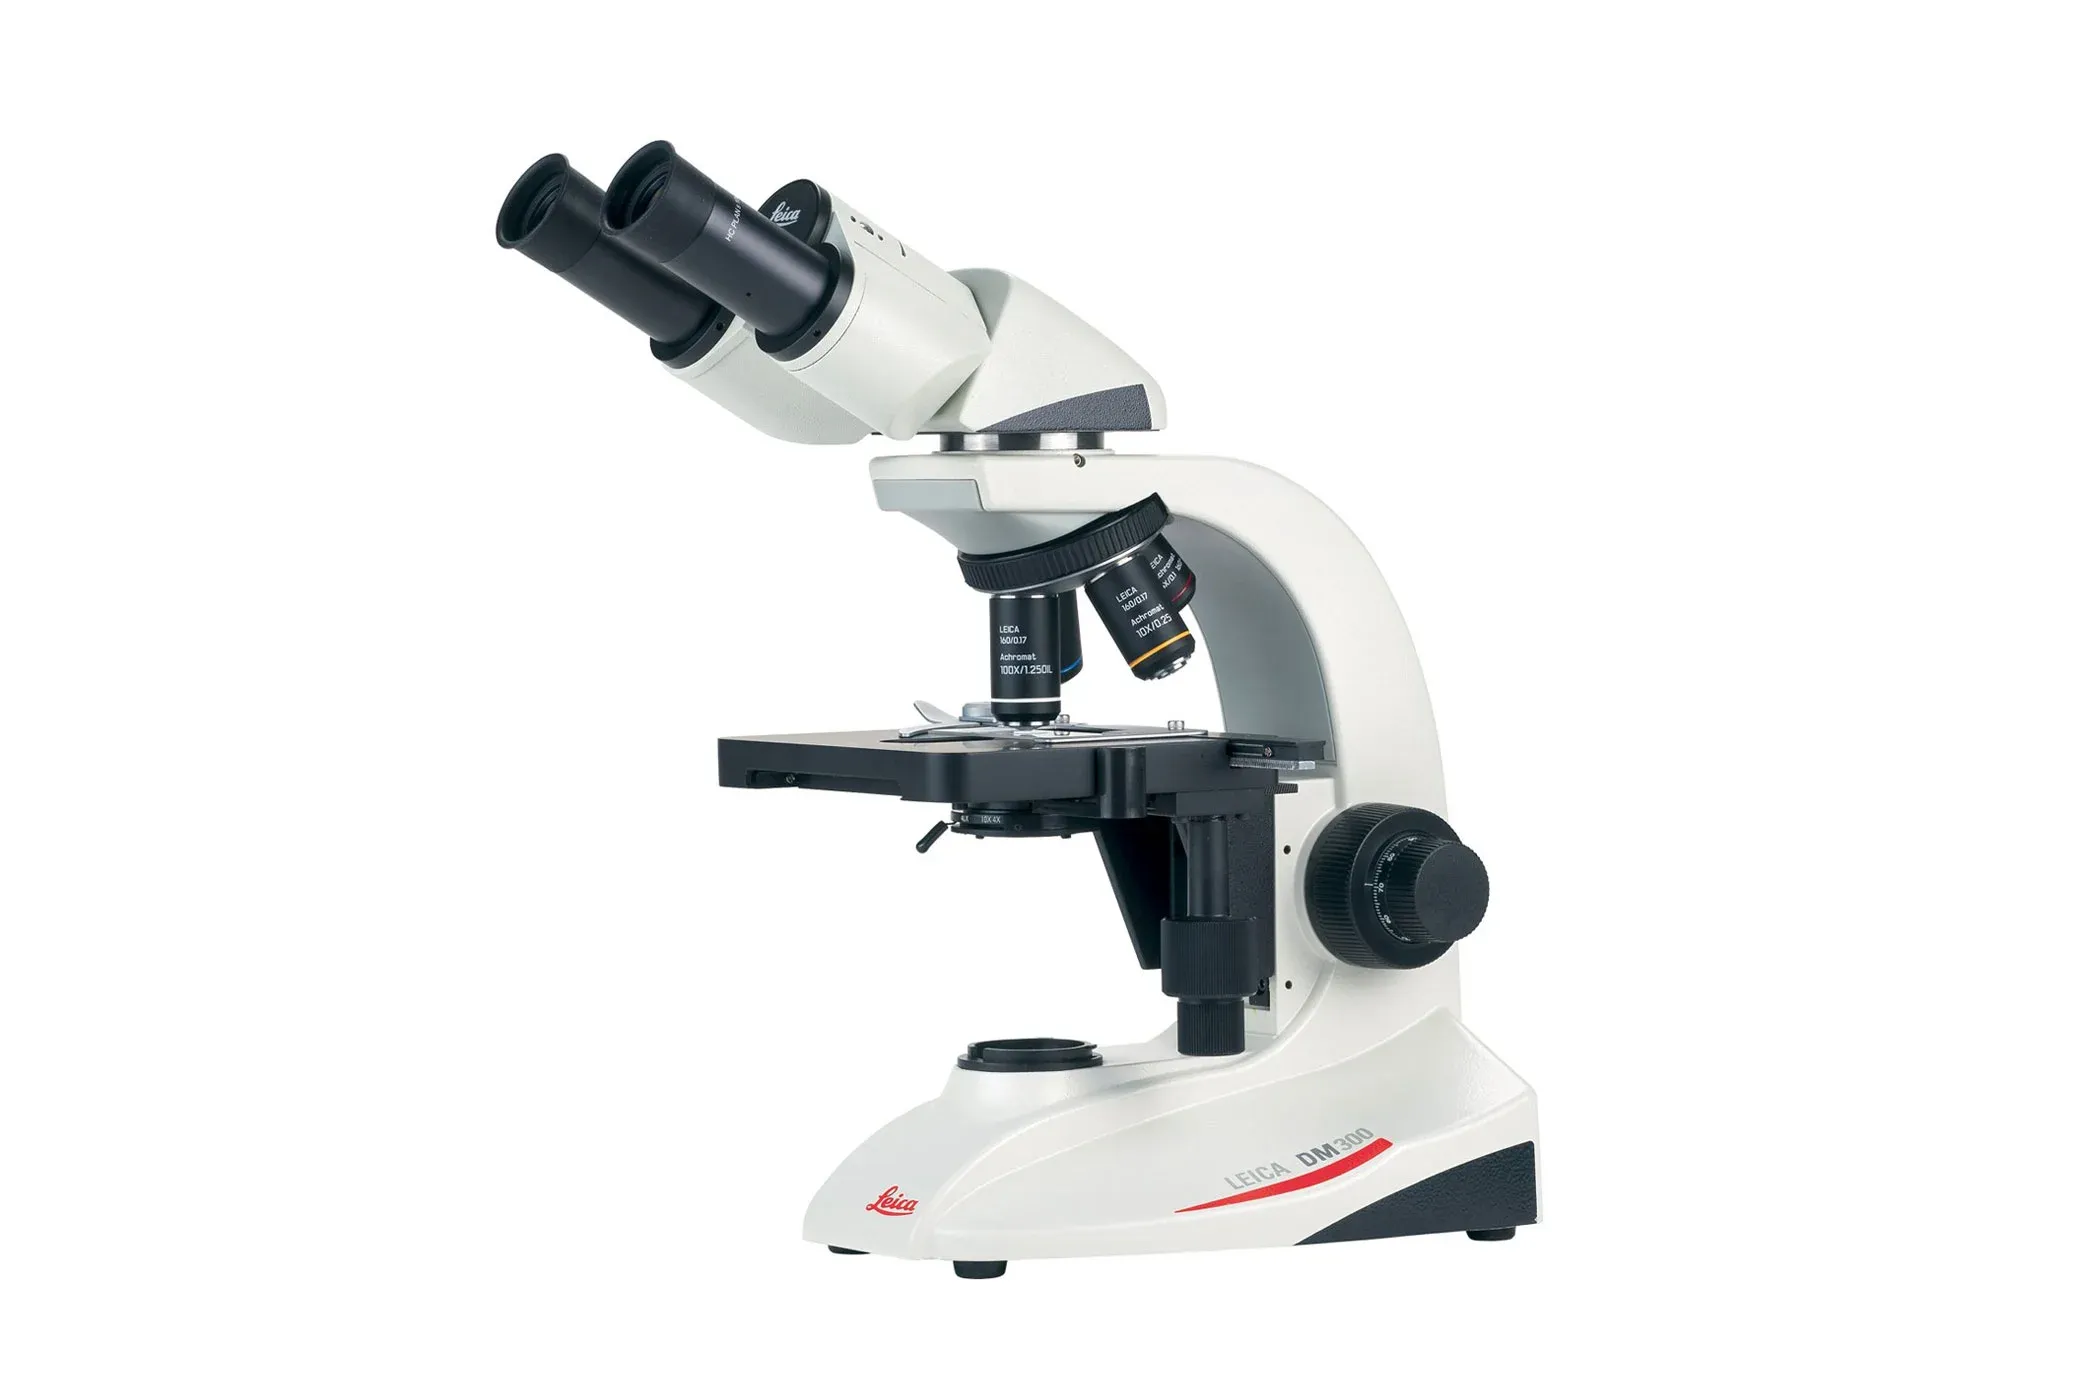 Leica DM300 Introductory Educational Microscope